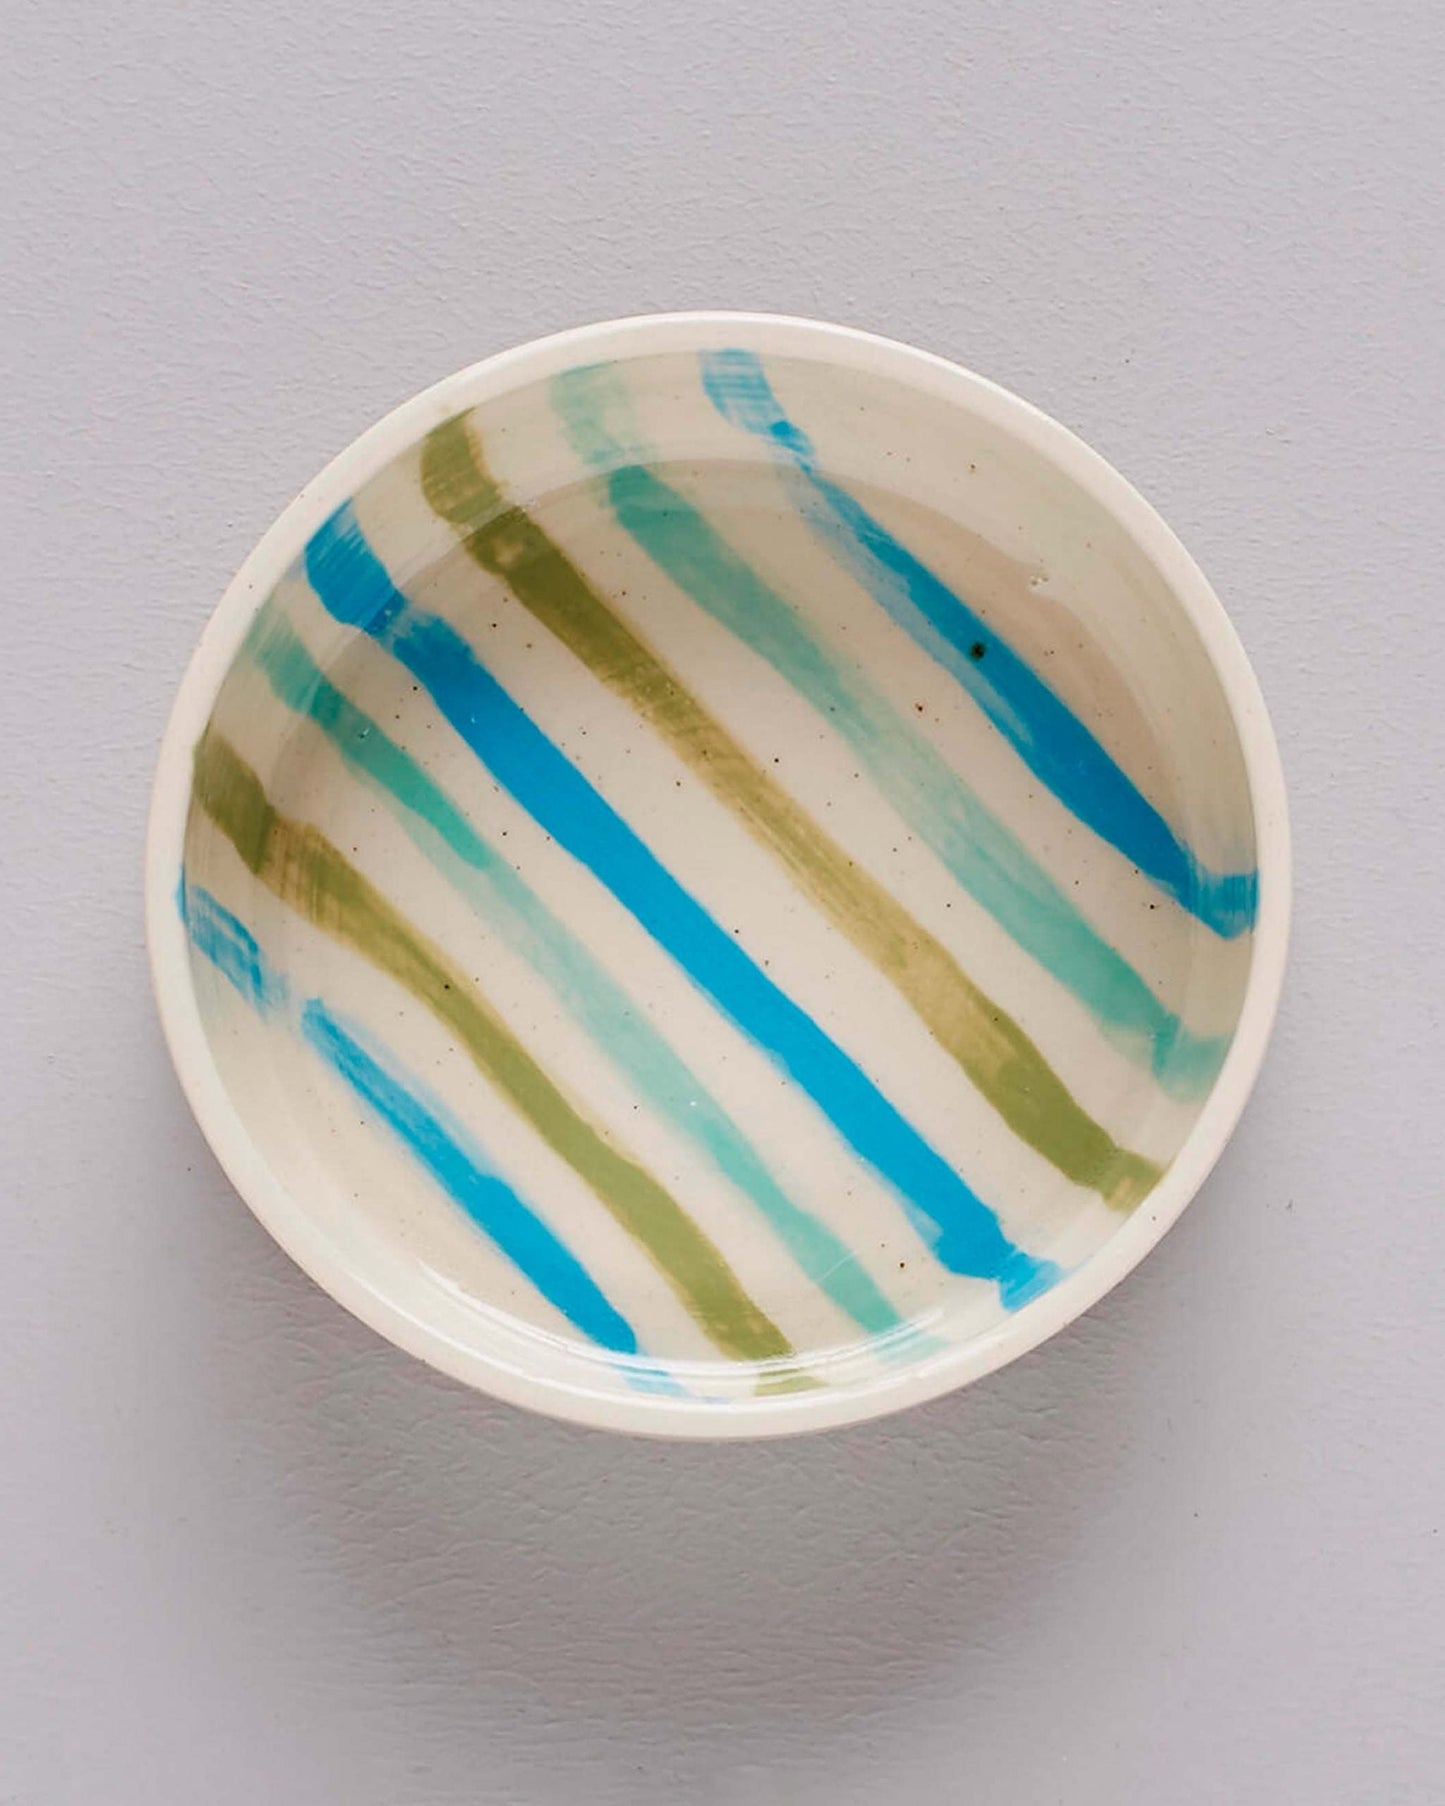 Handmade Blue Striped Ceramic Dog Water Bowl